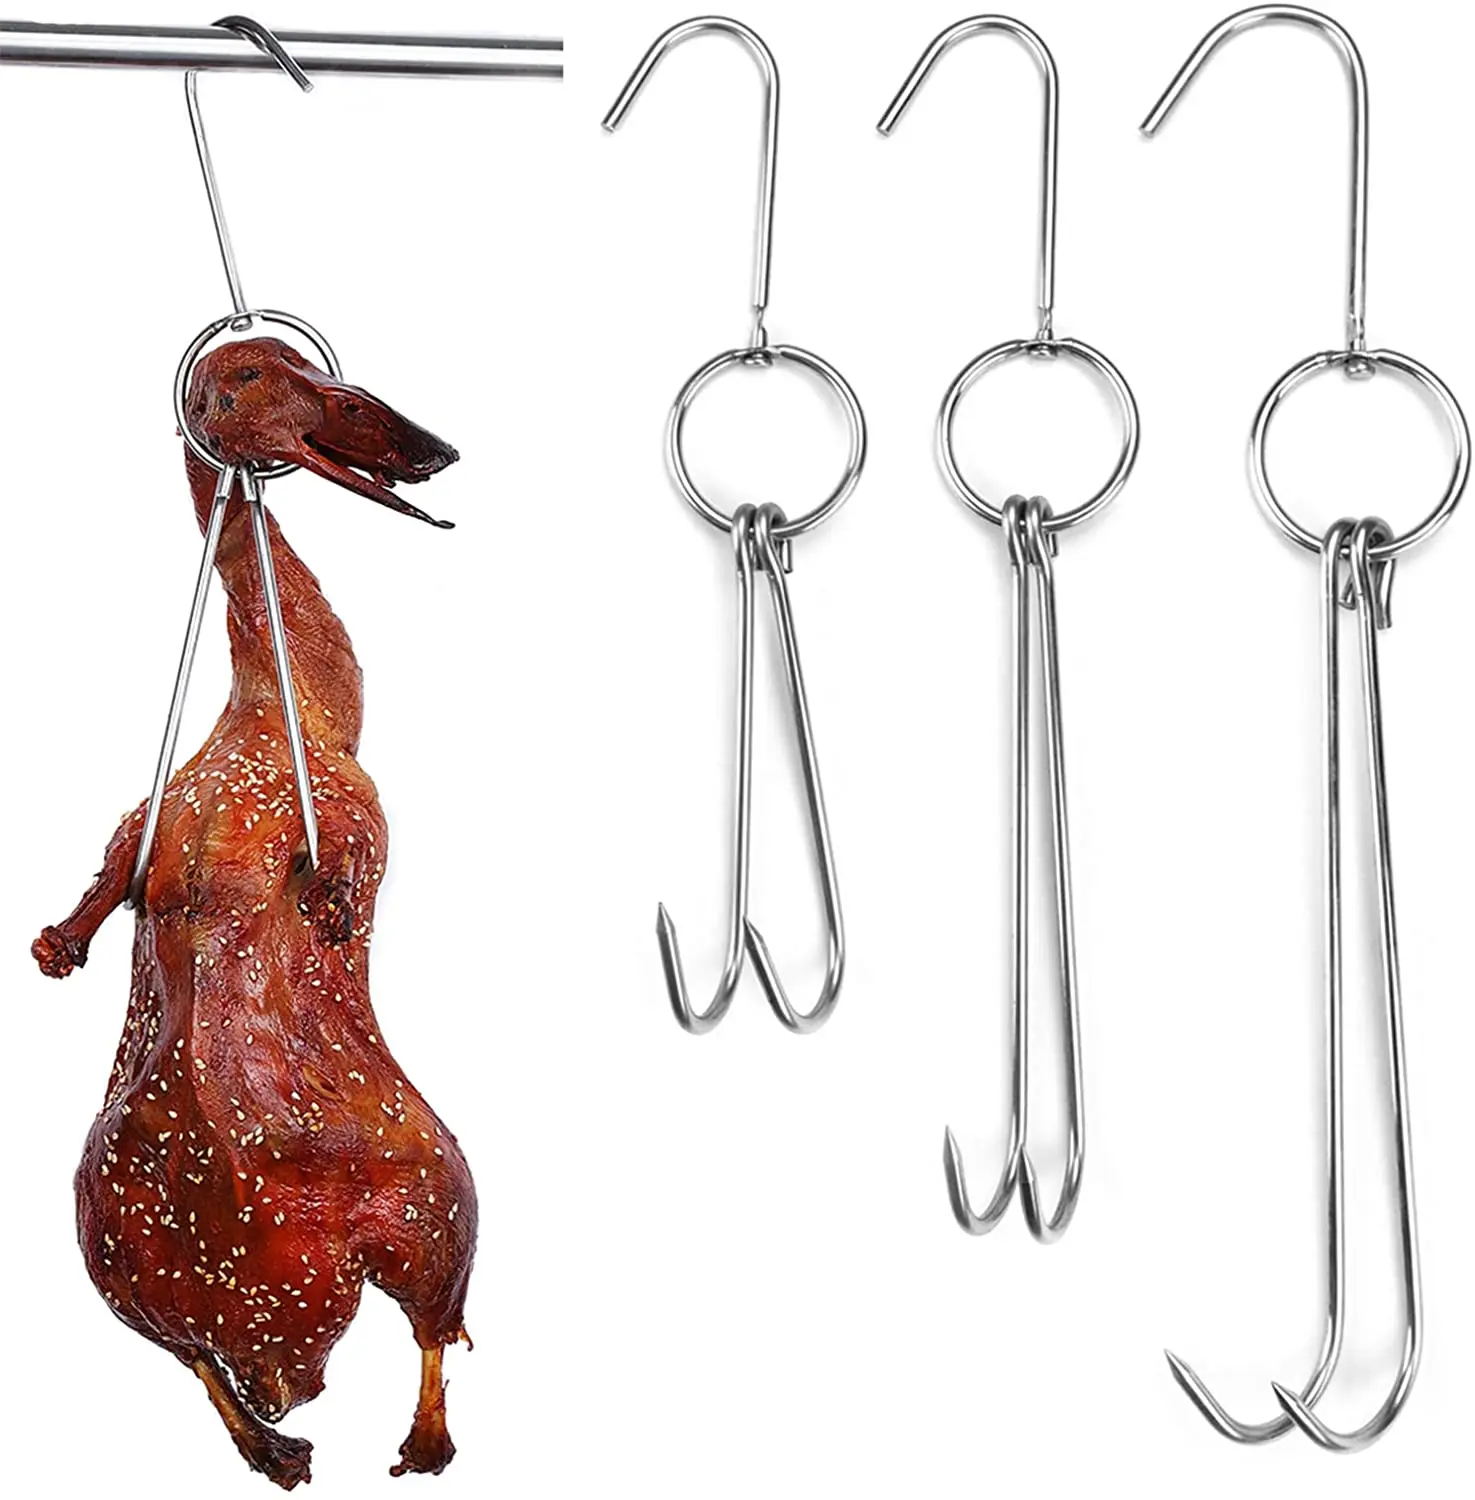 https://ae01.alicdn.com/kf/Sd645f50ca6bf461eb02516f921f2906dA/Stainless-Steel-Meat-Hooks-with-Sharp-Tip-Double-Hook-Poultry-Roast-Duck-Bacon-Hanging-Hook-Grill.jpg